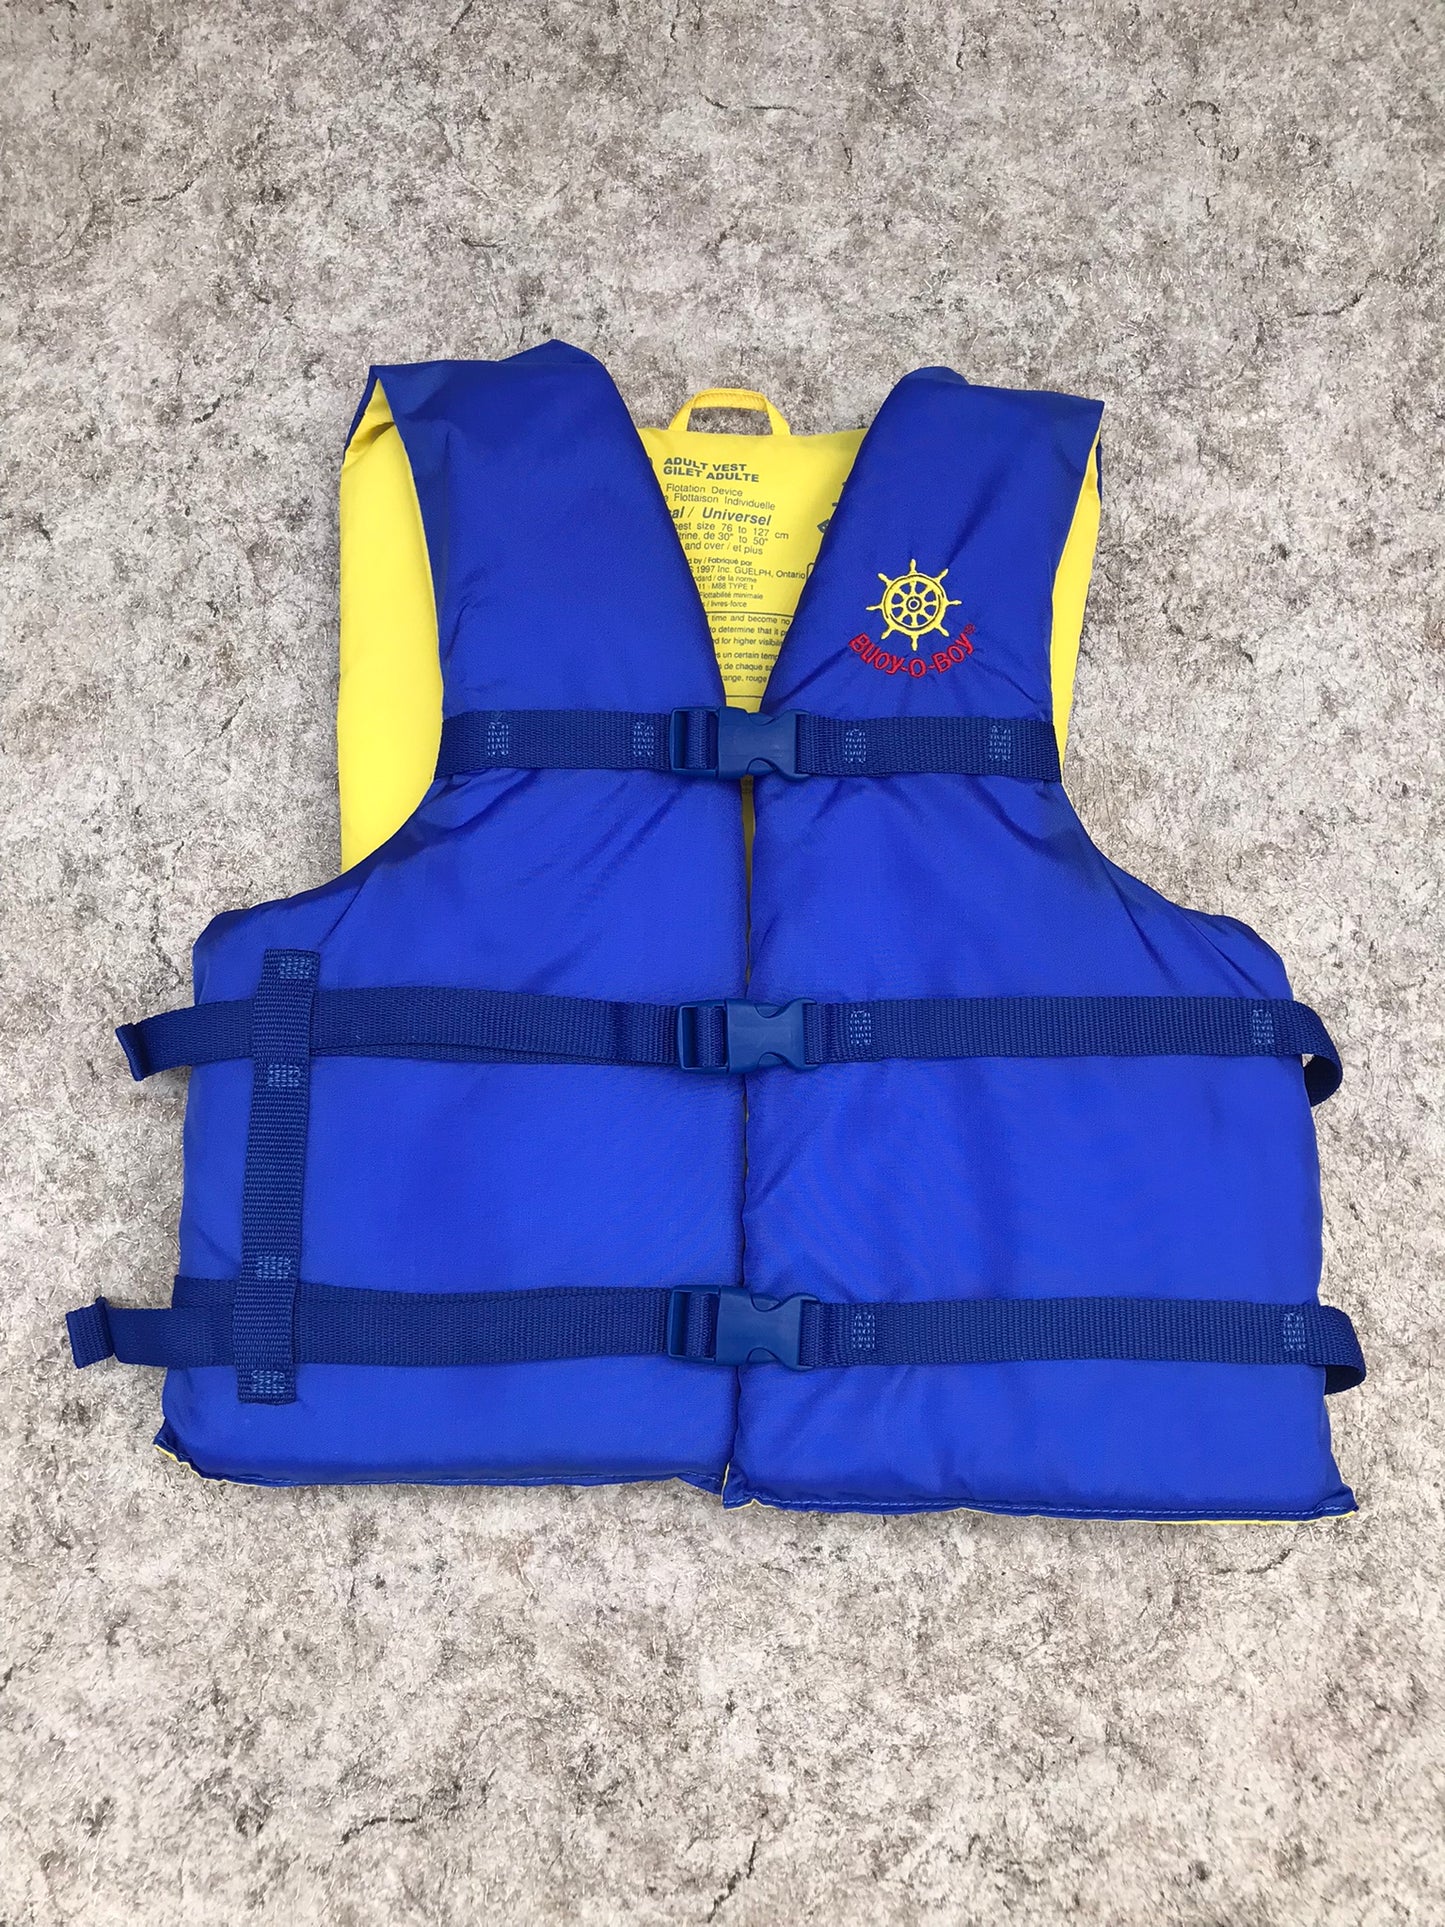 Life Jacket Adult Size 90-200 lb Universal Adjustable Buoy o Boy  Blue Yellow